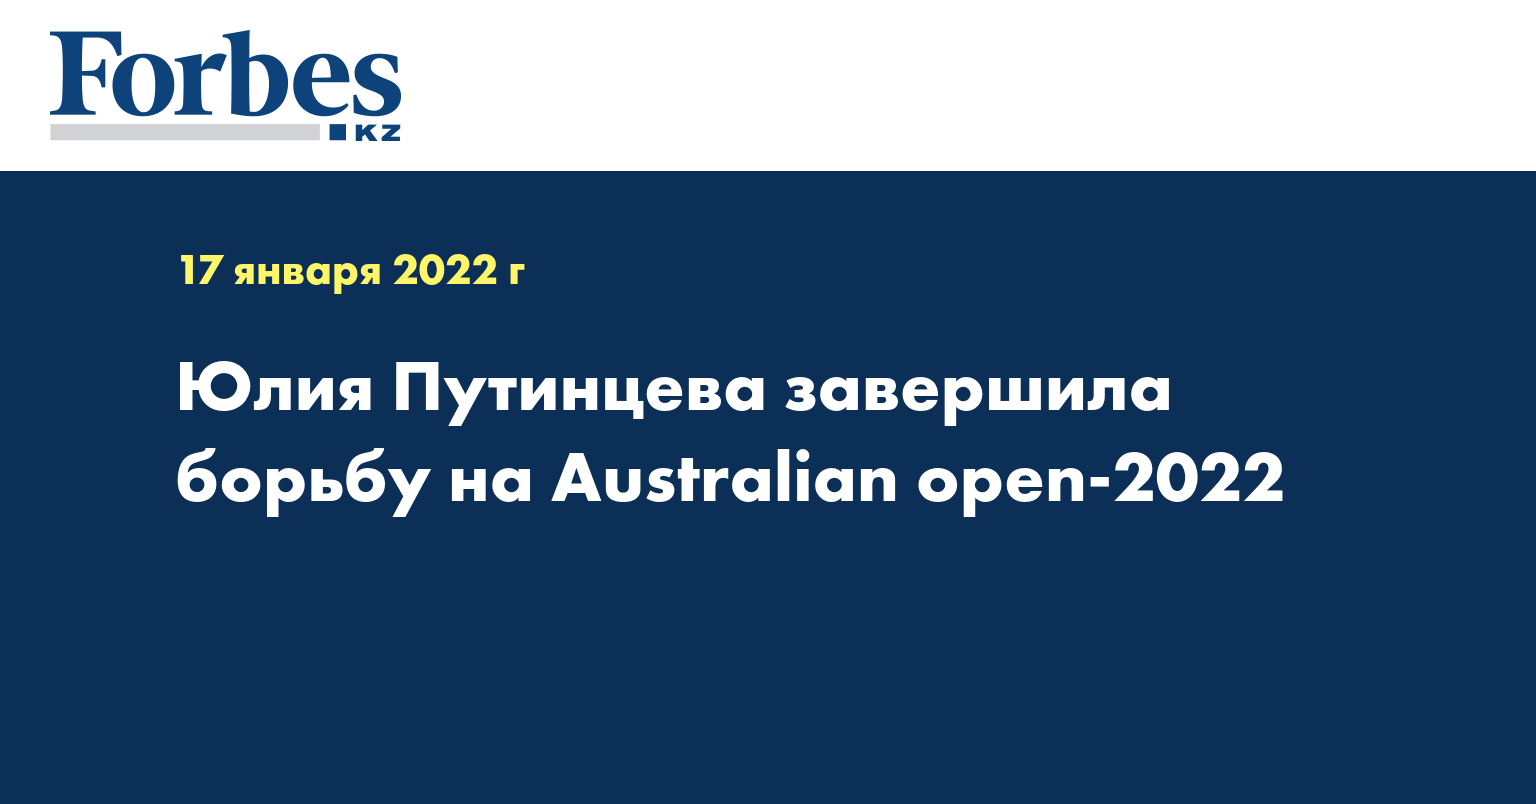 Юлия Путинцева завершила борьбу на Australian open 2022